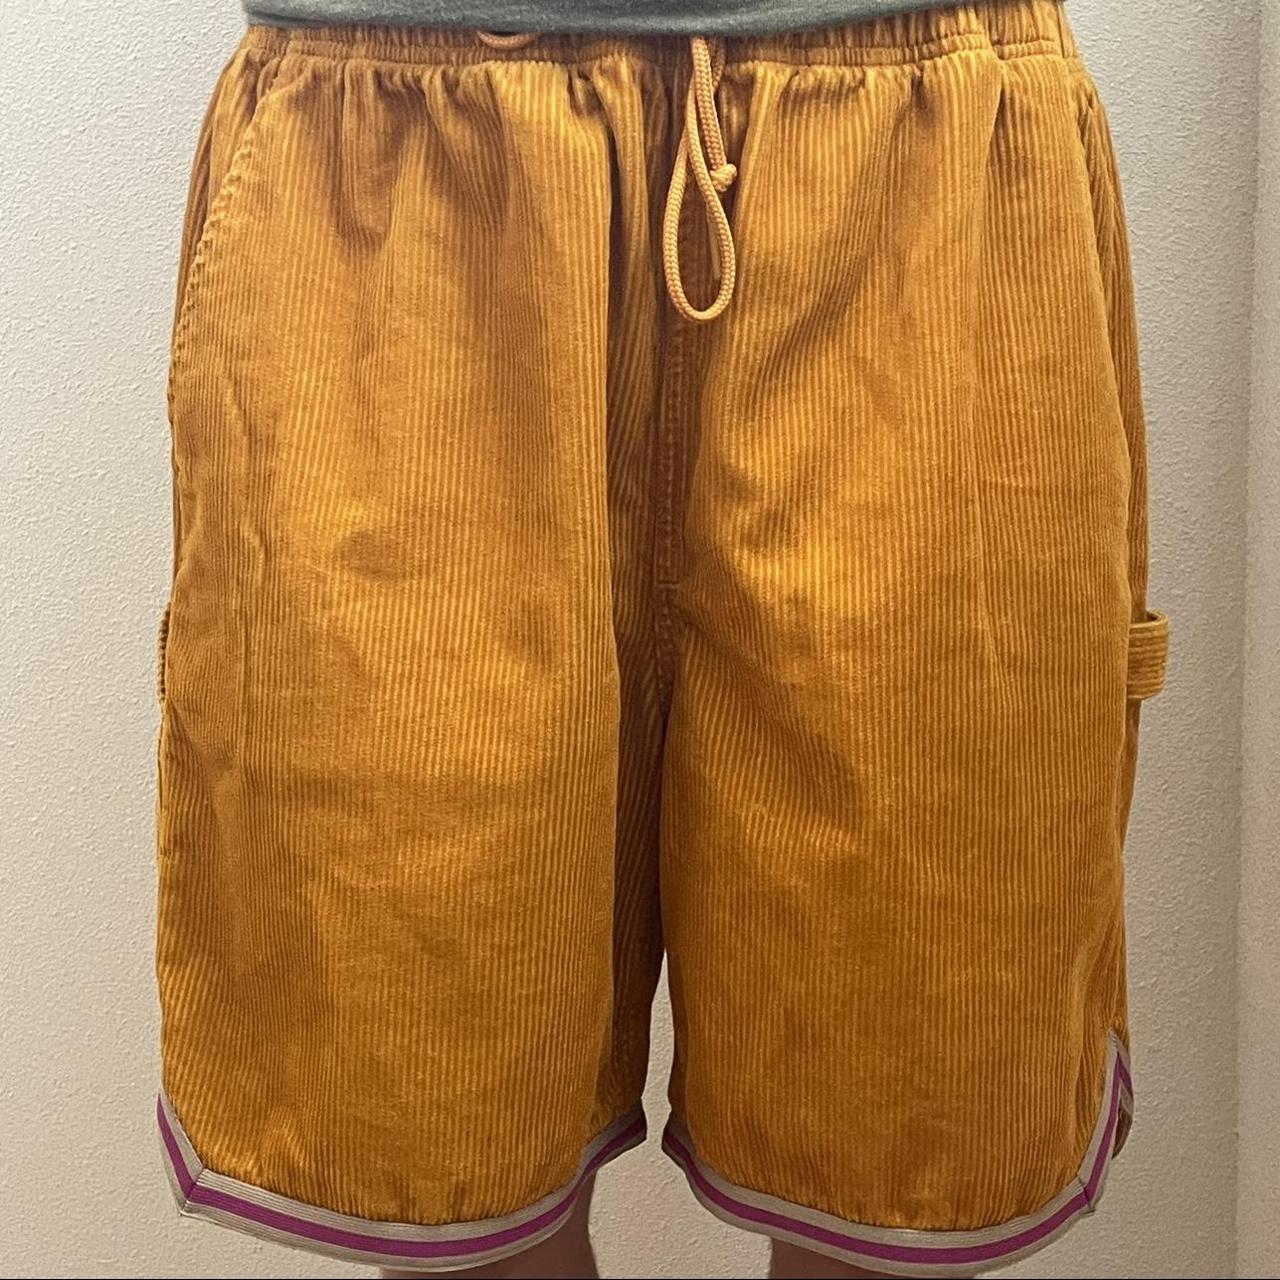 Converse Men's Yellow and Pink Shorts (2)